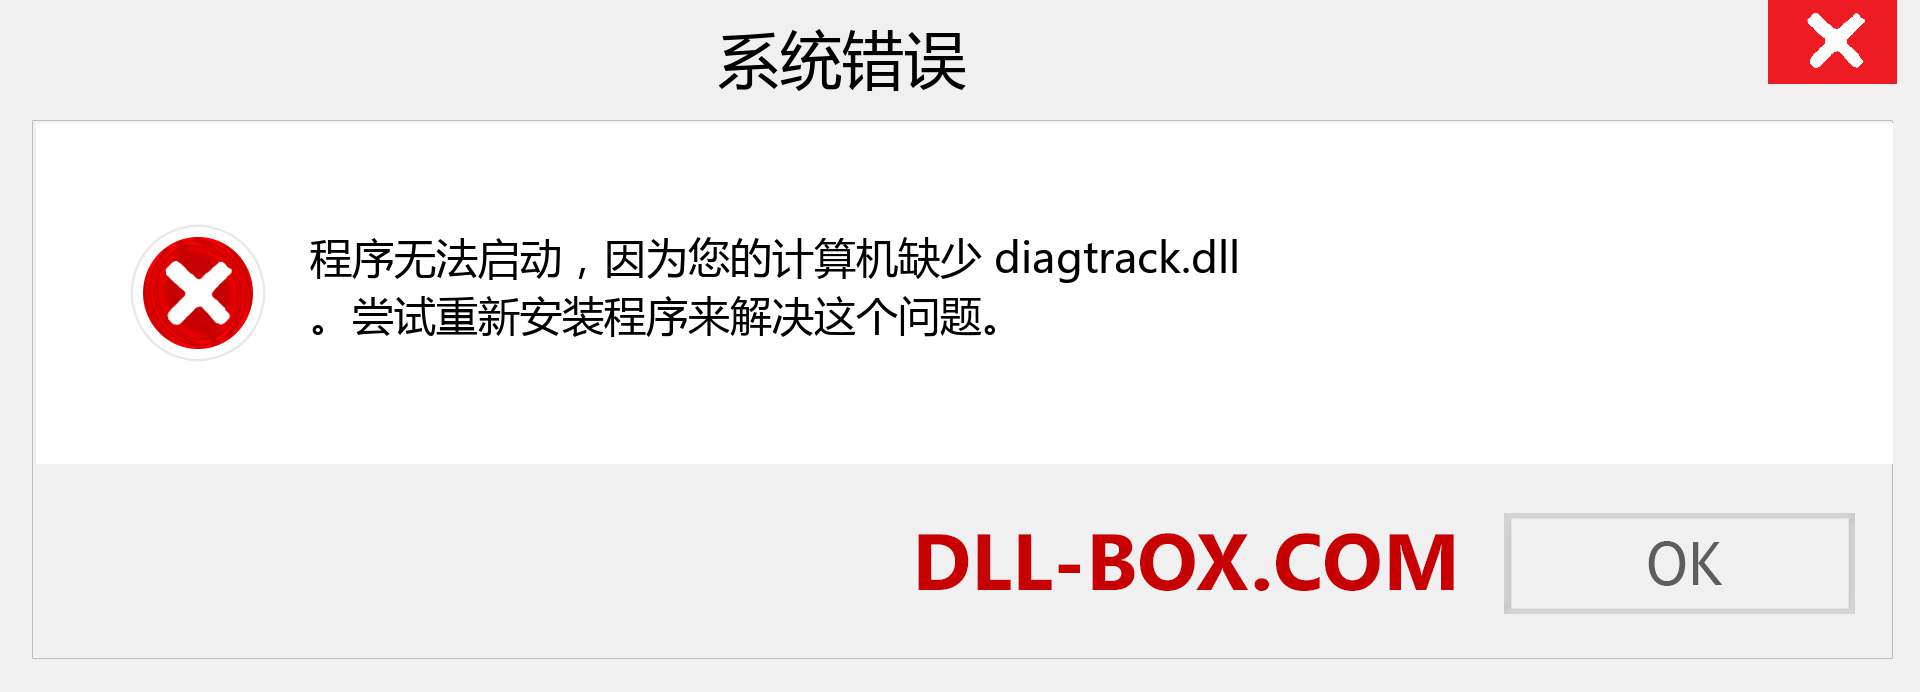 diagtrack.dll 文件丢失？。 适用于 Windows 7、8、10 的下载 - 修复 Windows、照片、图像上的 diagtrack dll 丢失错误